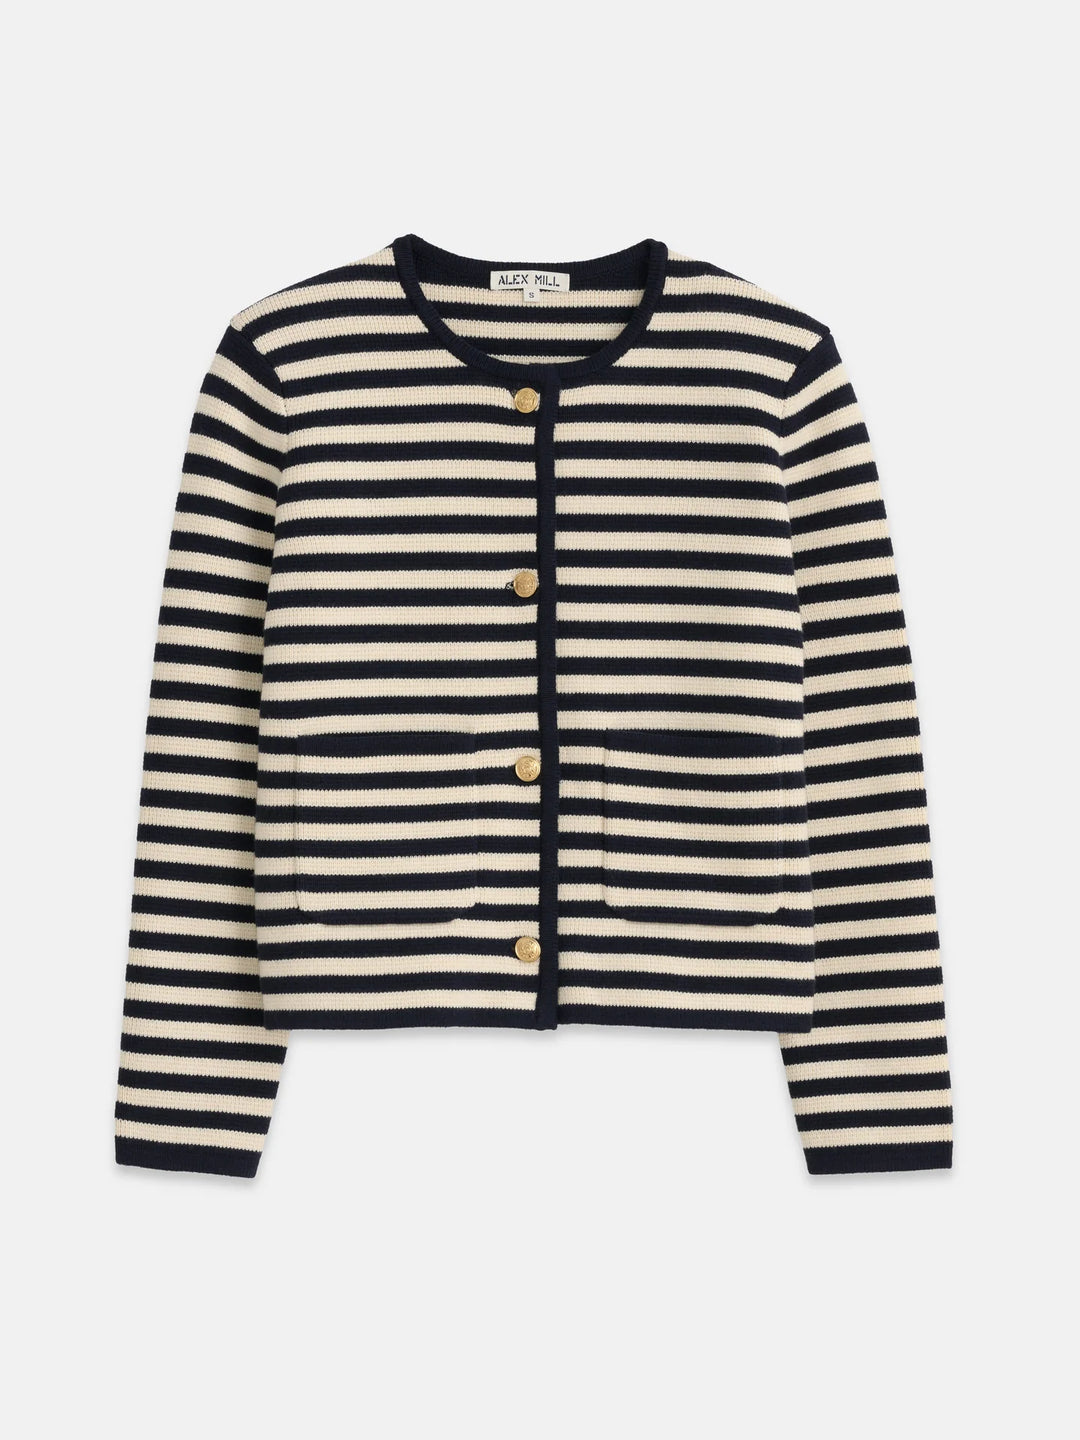 Paris Sweater Jacket